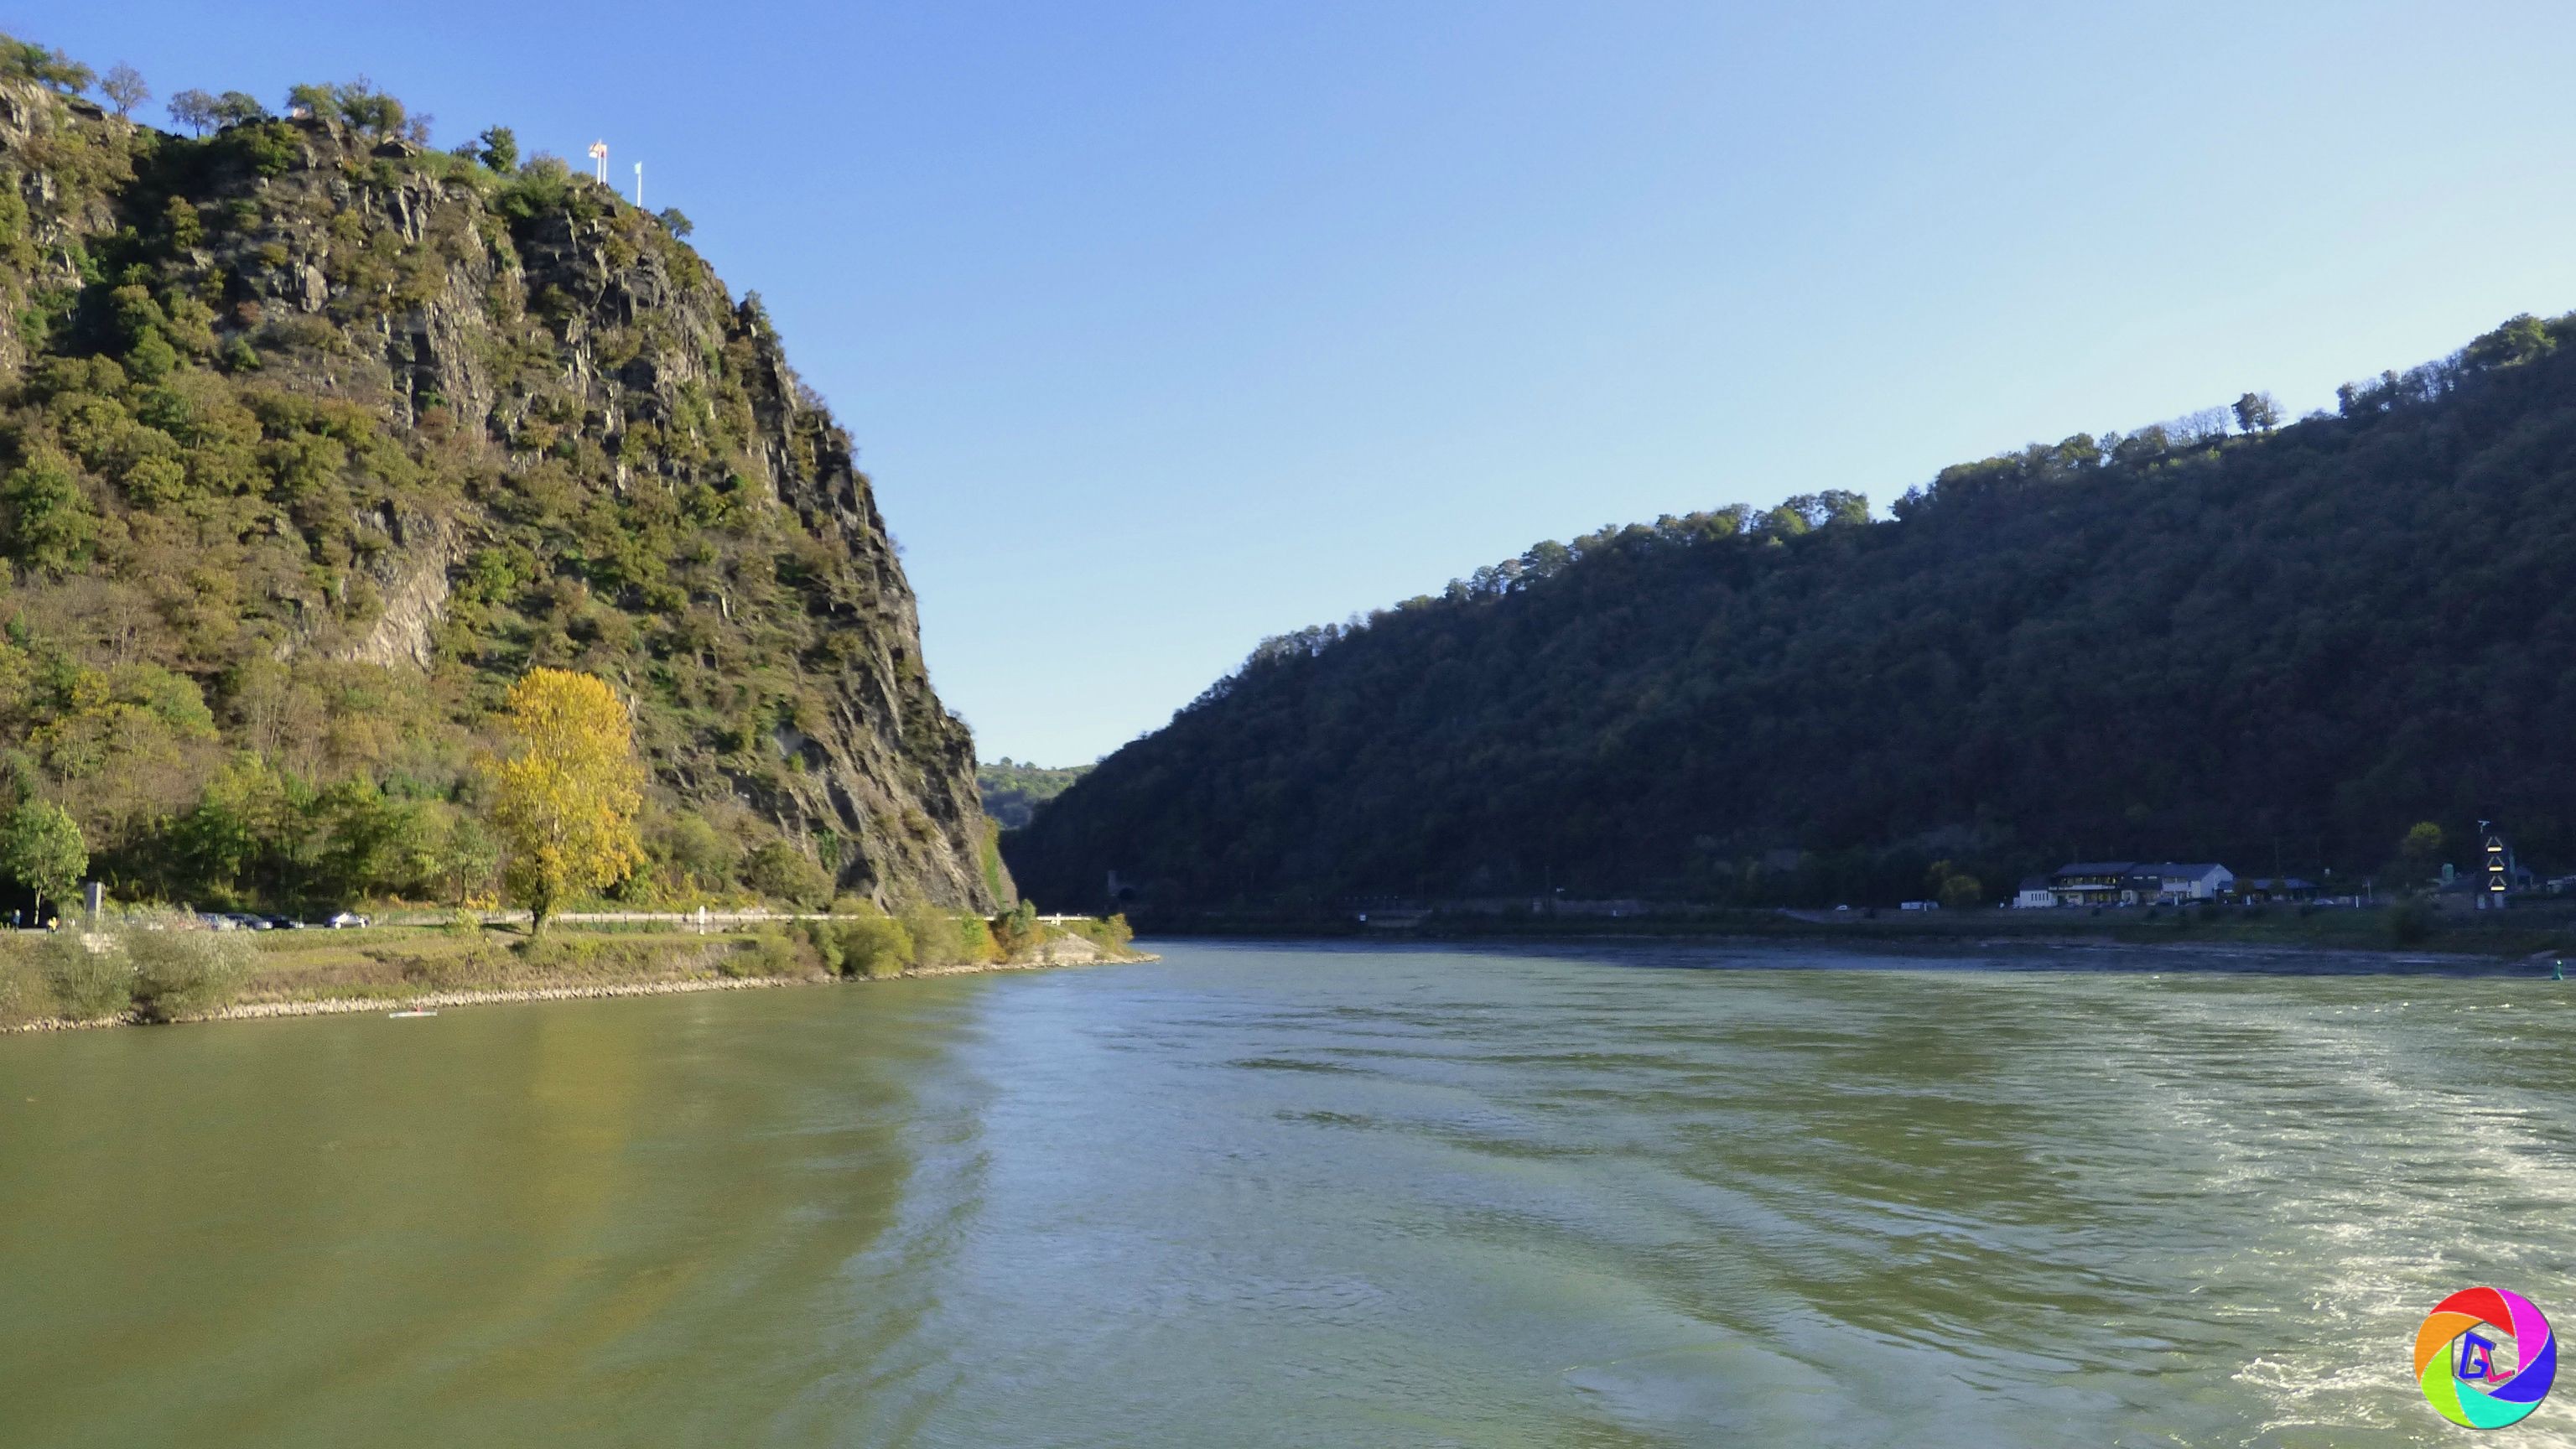 Loreley Rock (on left bank) where Rhine twists to pass it